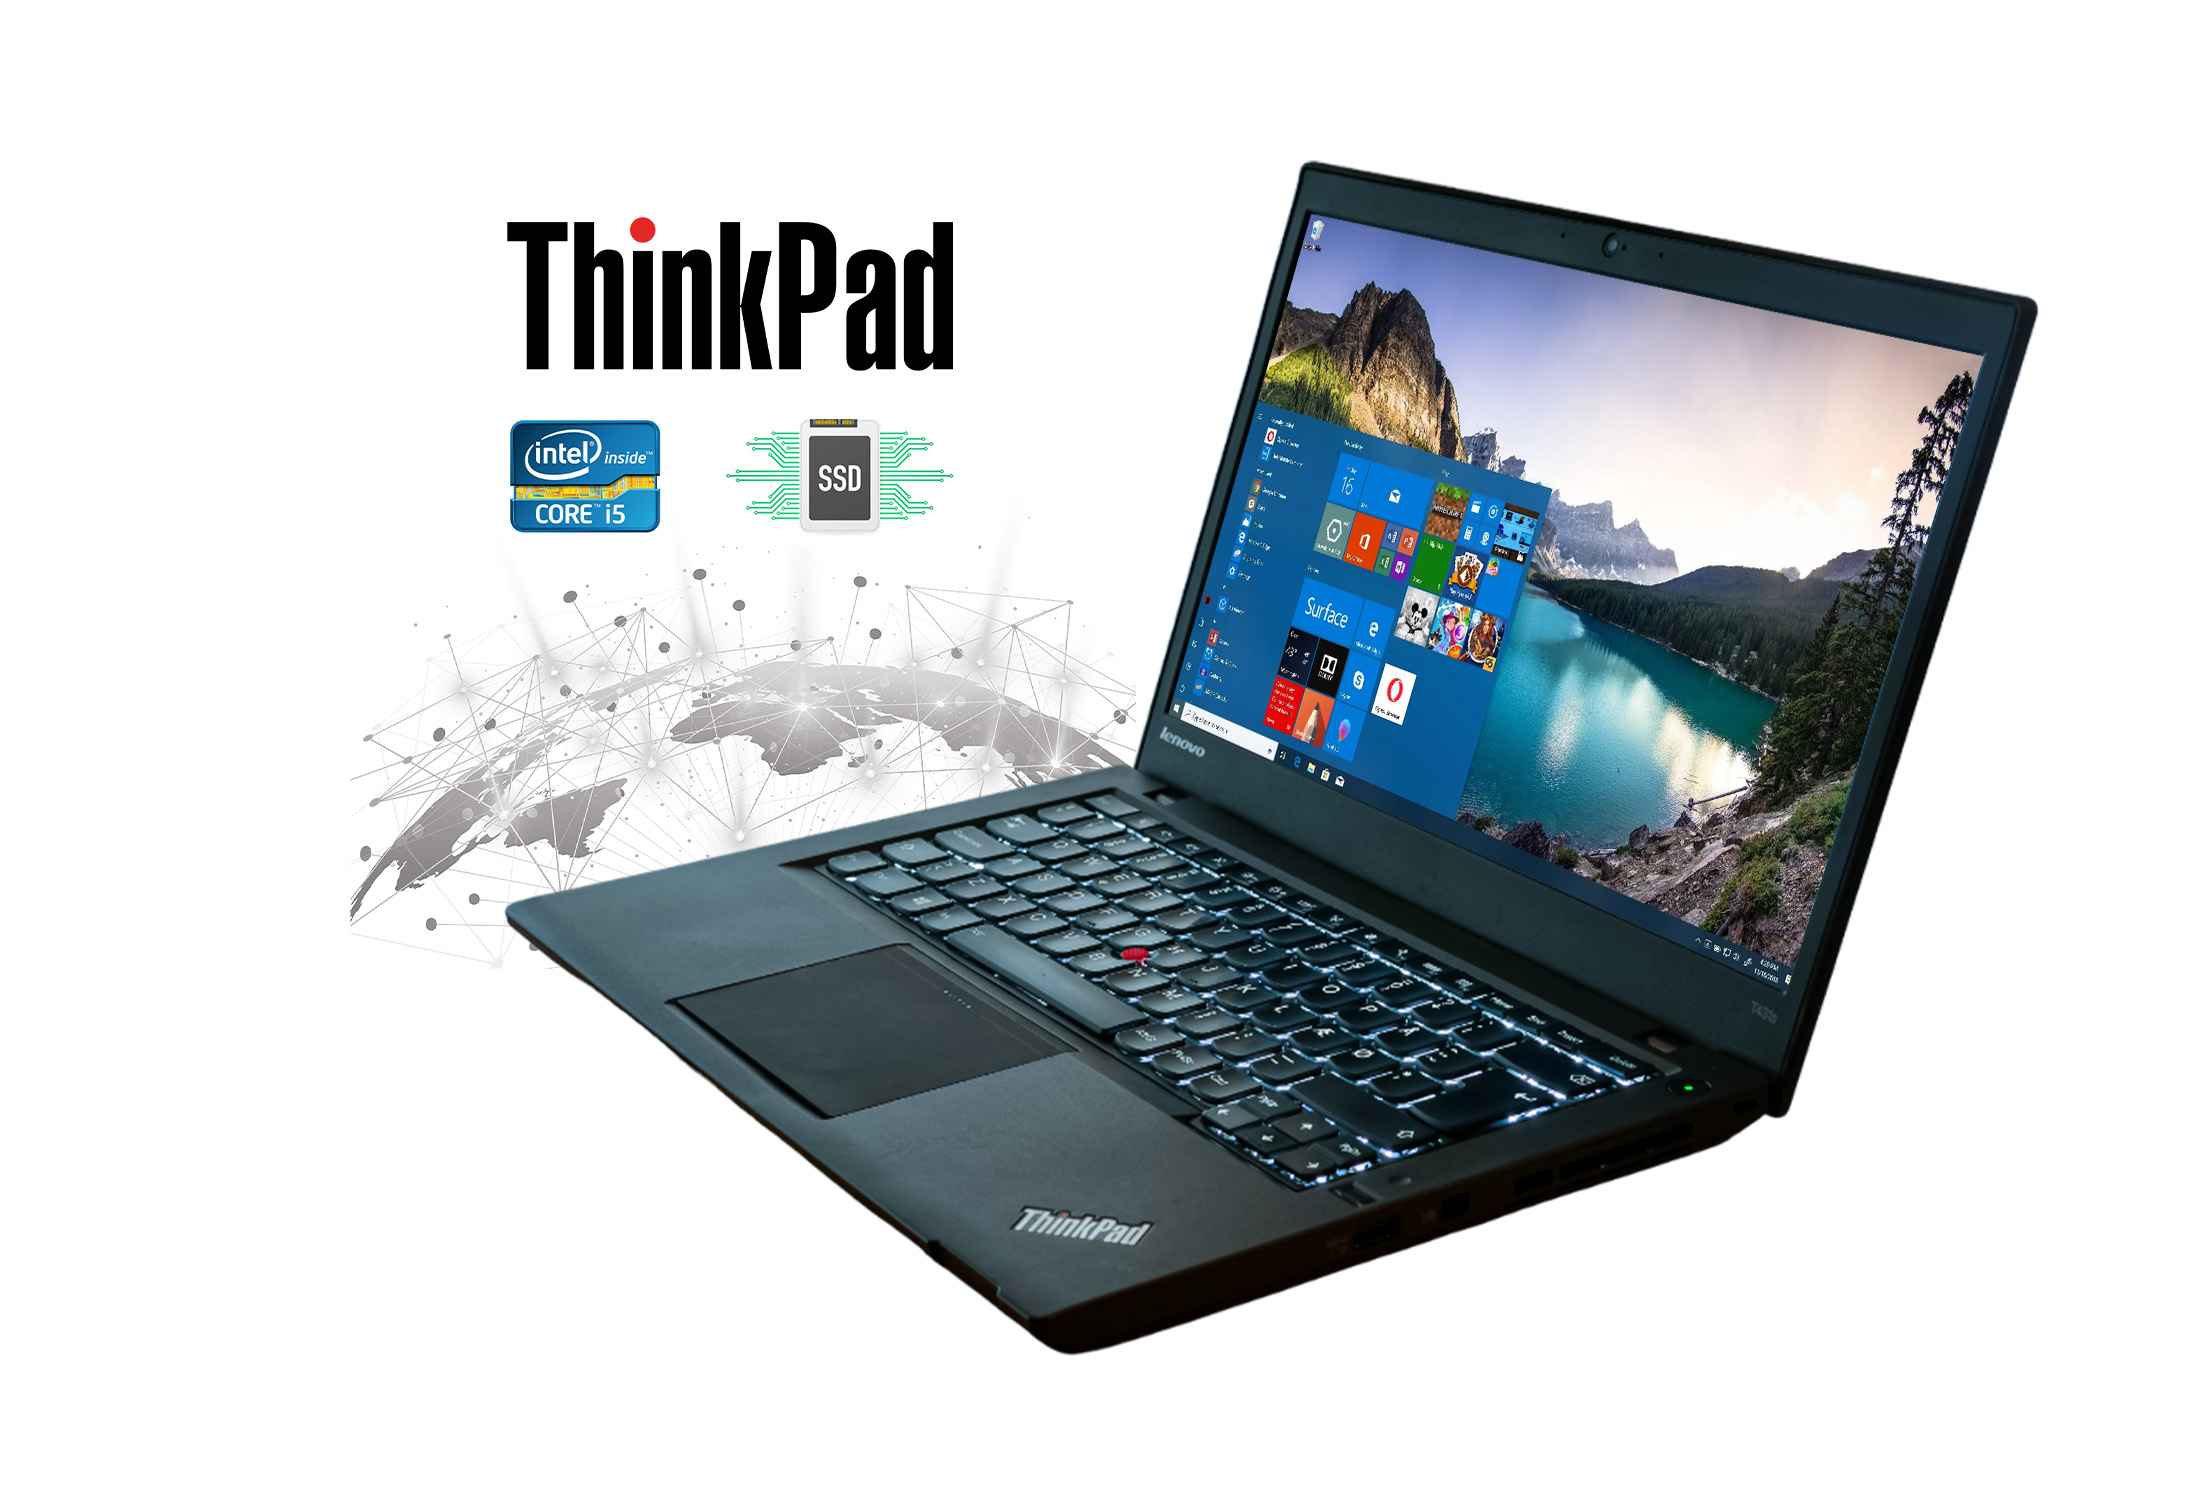 Lenovo Thinkpad T431s i5-3437U 8GB RAM SSD 1600x900 Camera-VqooY.jpeg